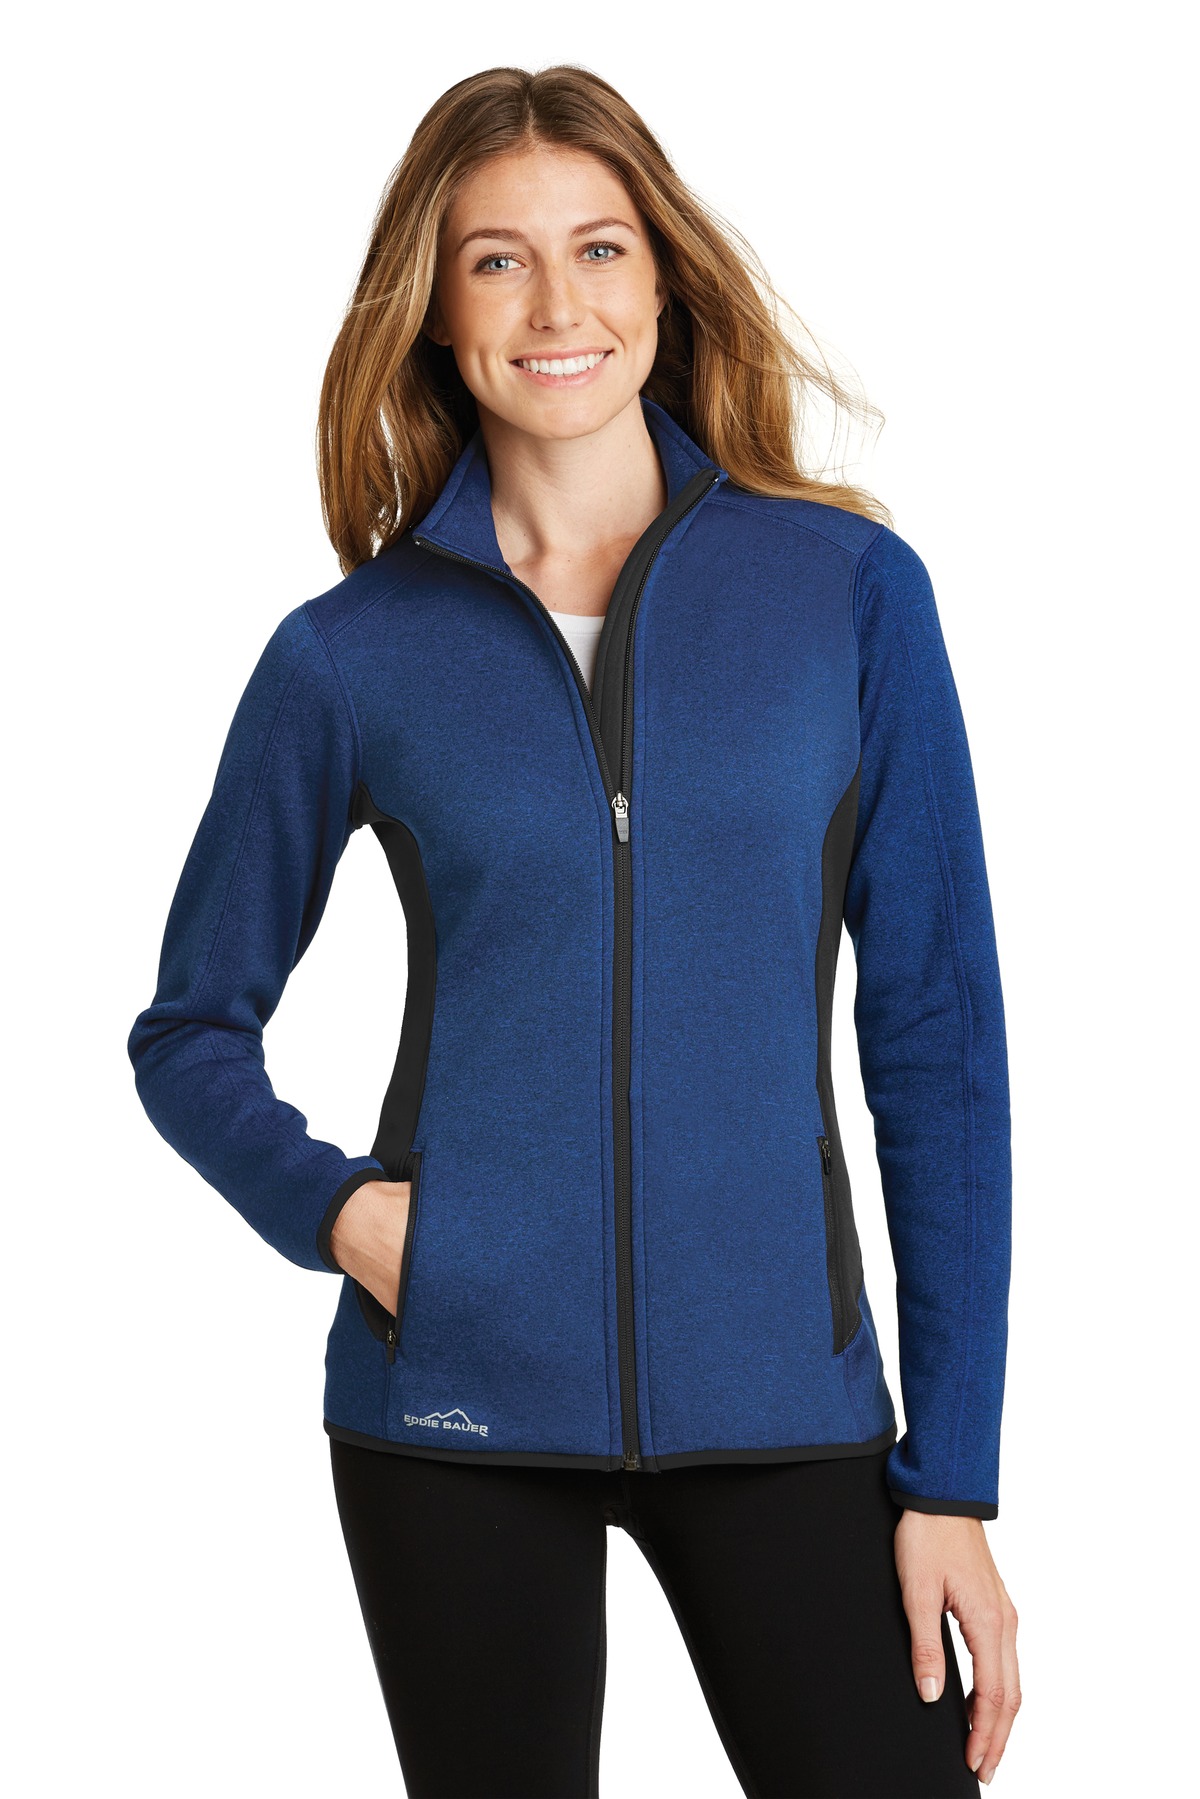 Eddie Bauer Corporate Hospitality Ladies Sweatshirts & Fleece ® Ladies Full-Zip Heather Stretch Fleece Jacket.-Eddie Bauer